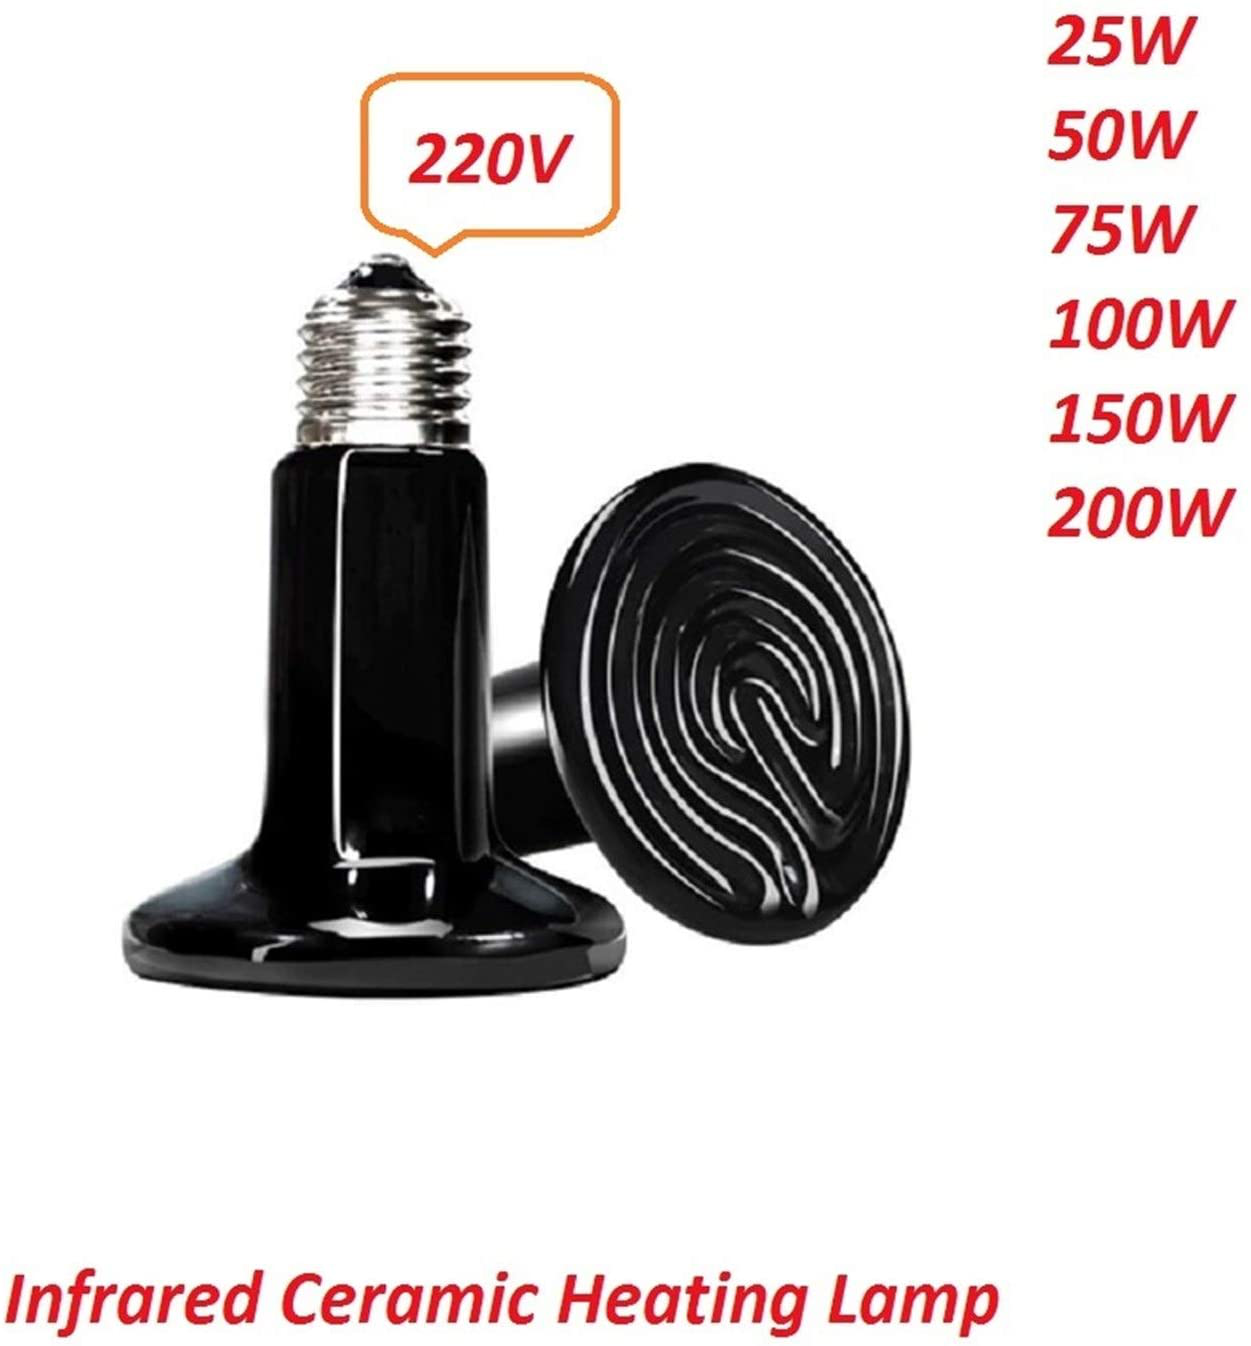 HXY2020 Pet Heating Pad Pet Reptile Far Infrared Ceramic Heating Lamp Heat Emitter Light Bulb 25W 50W 75W 100W 150W 200W Reptile & Amphibian Habitat